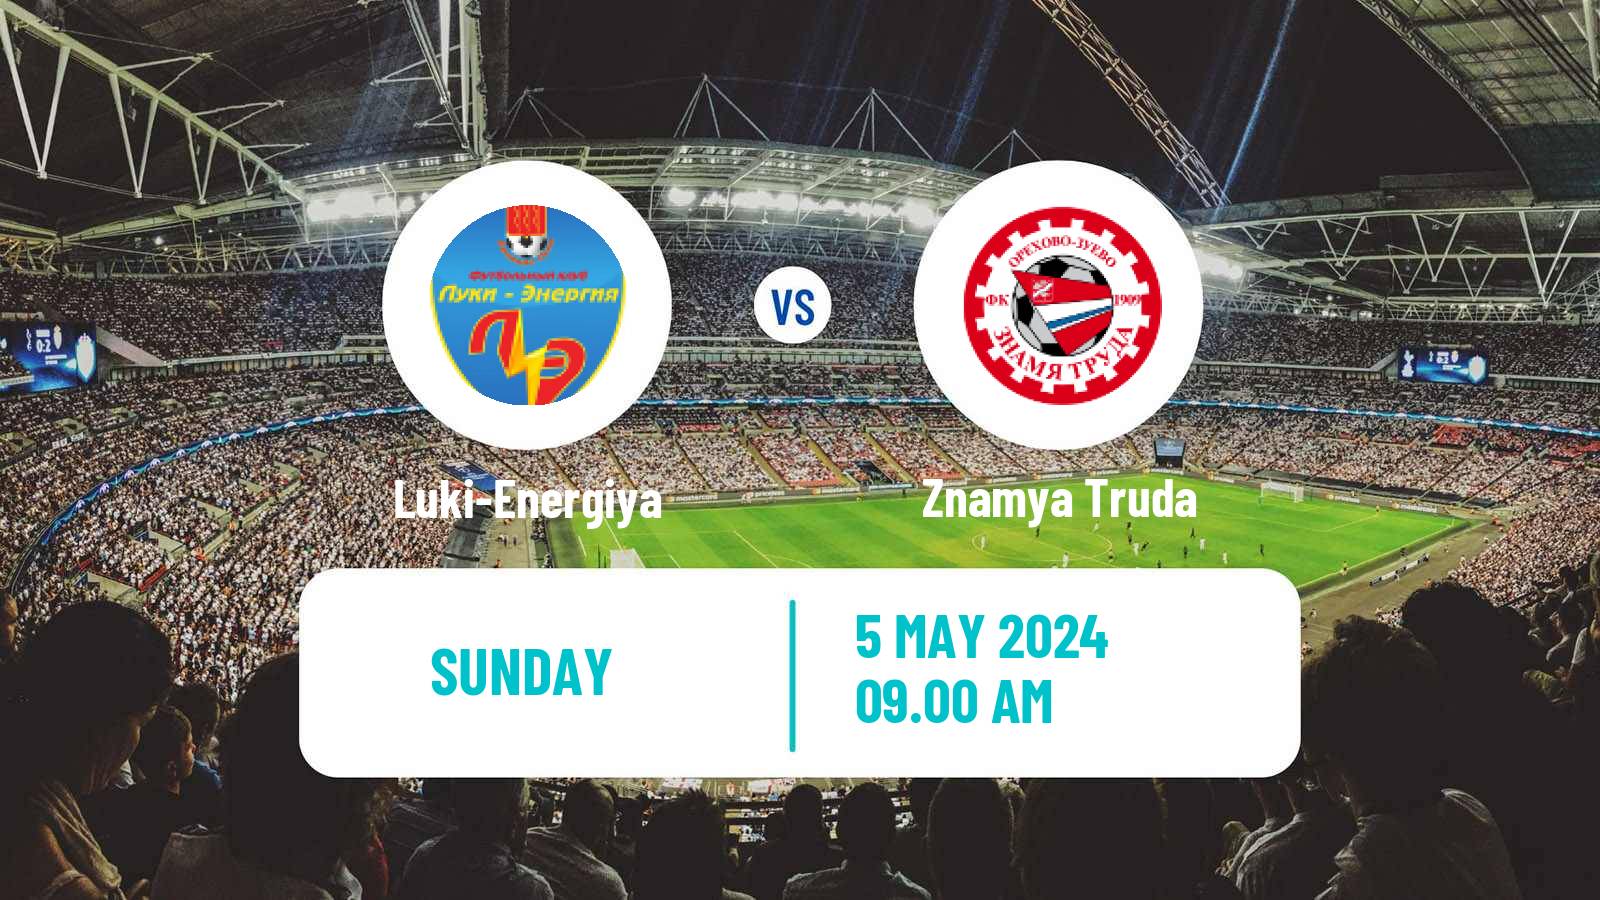 Soccer FNL 2 Division B Group 2 Luki-Energiya - Znamya Truda